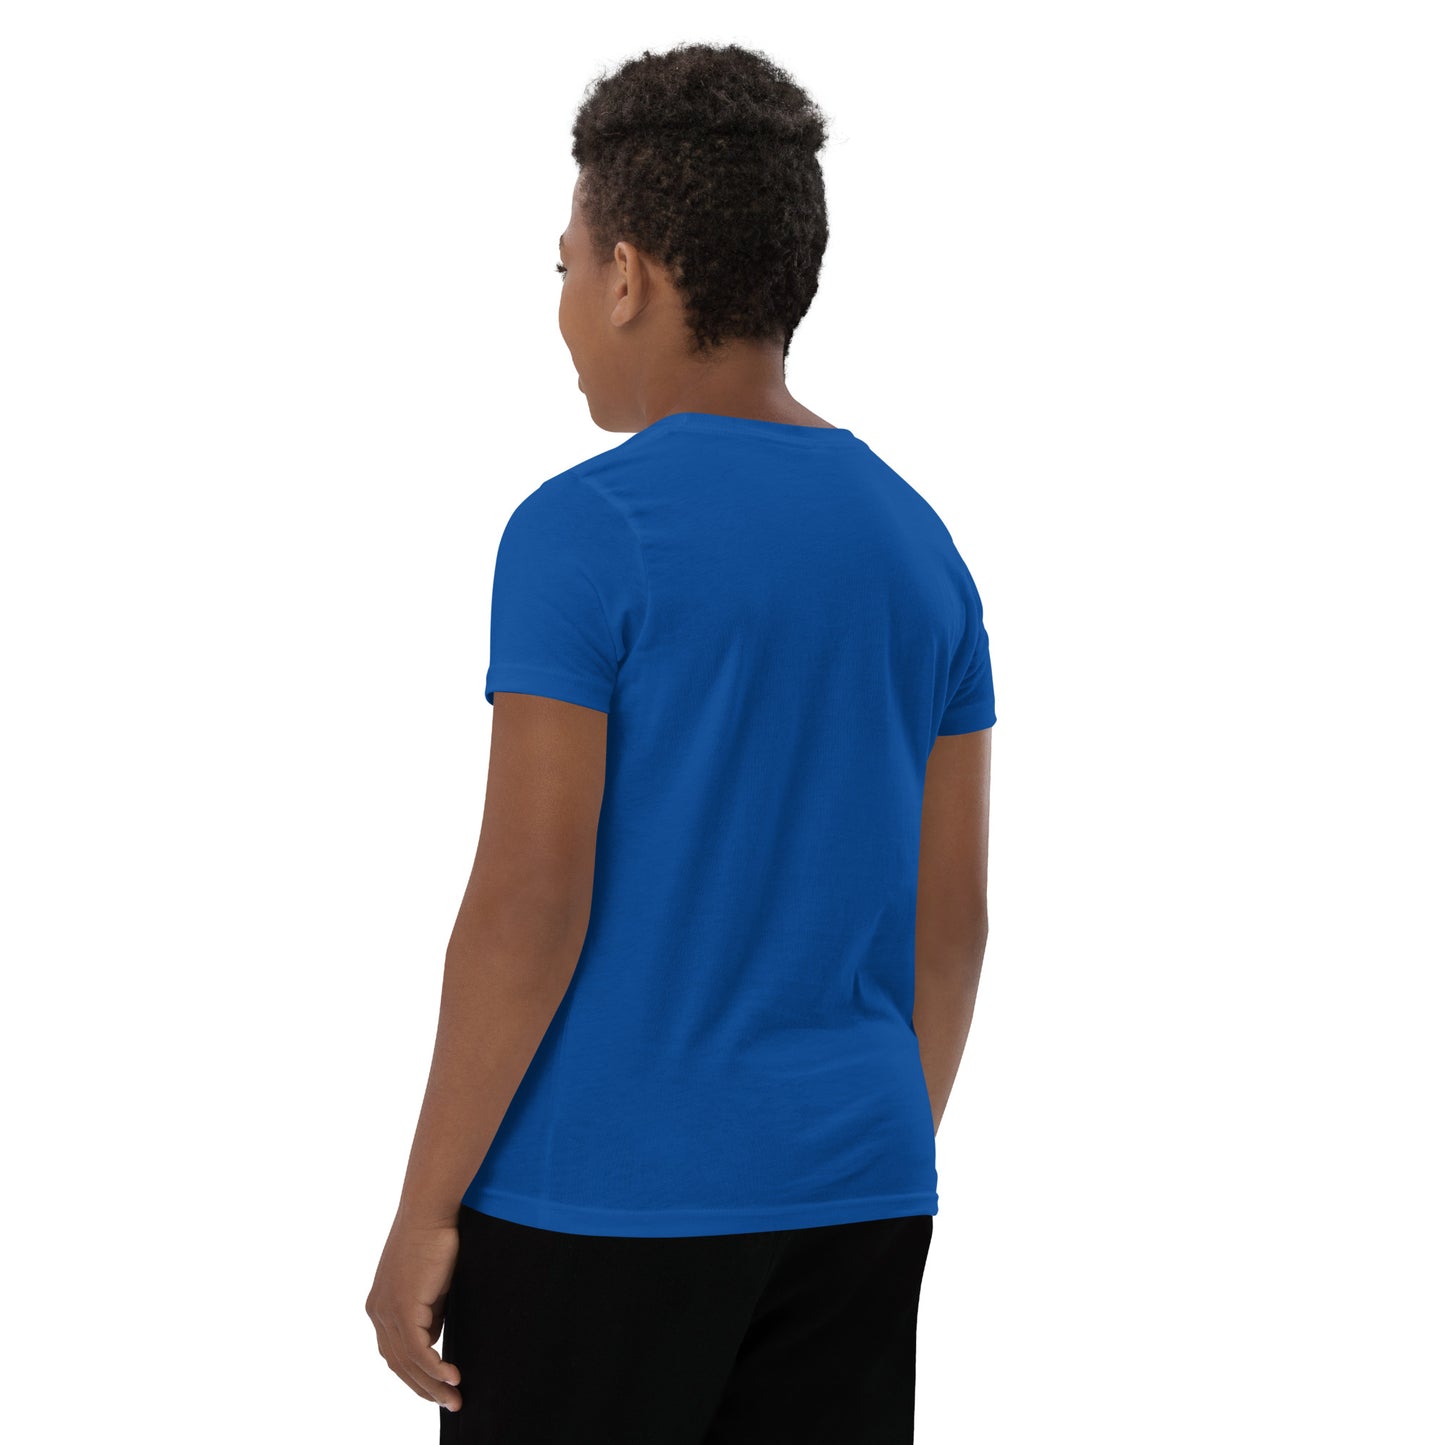 Straight Outta Masjid- Youth Short Sleeve T-Shirt